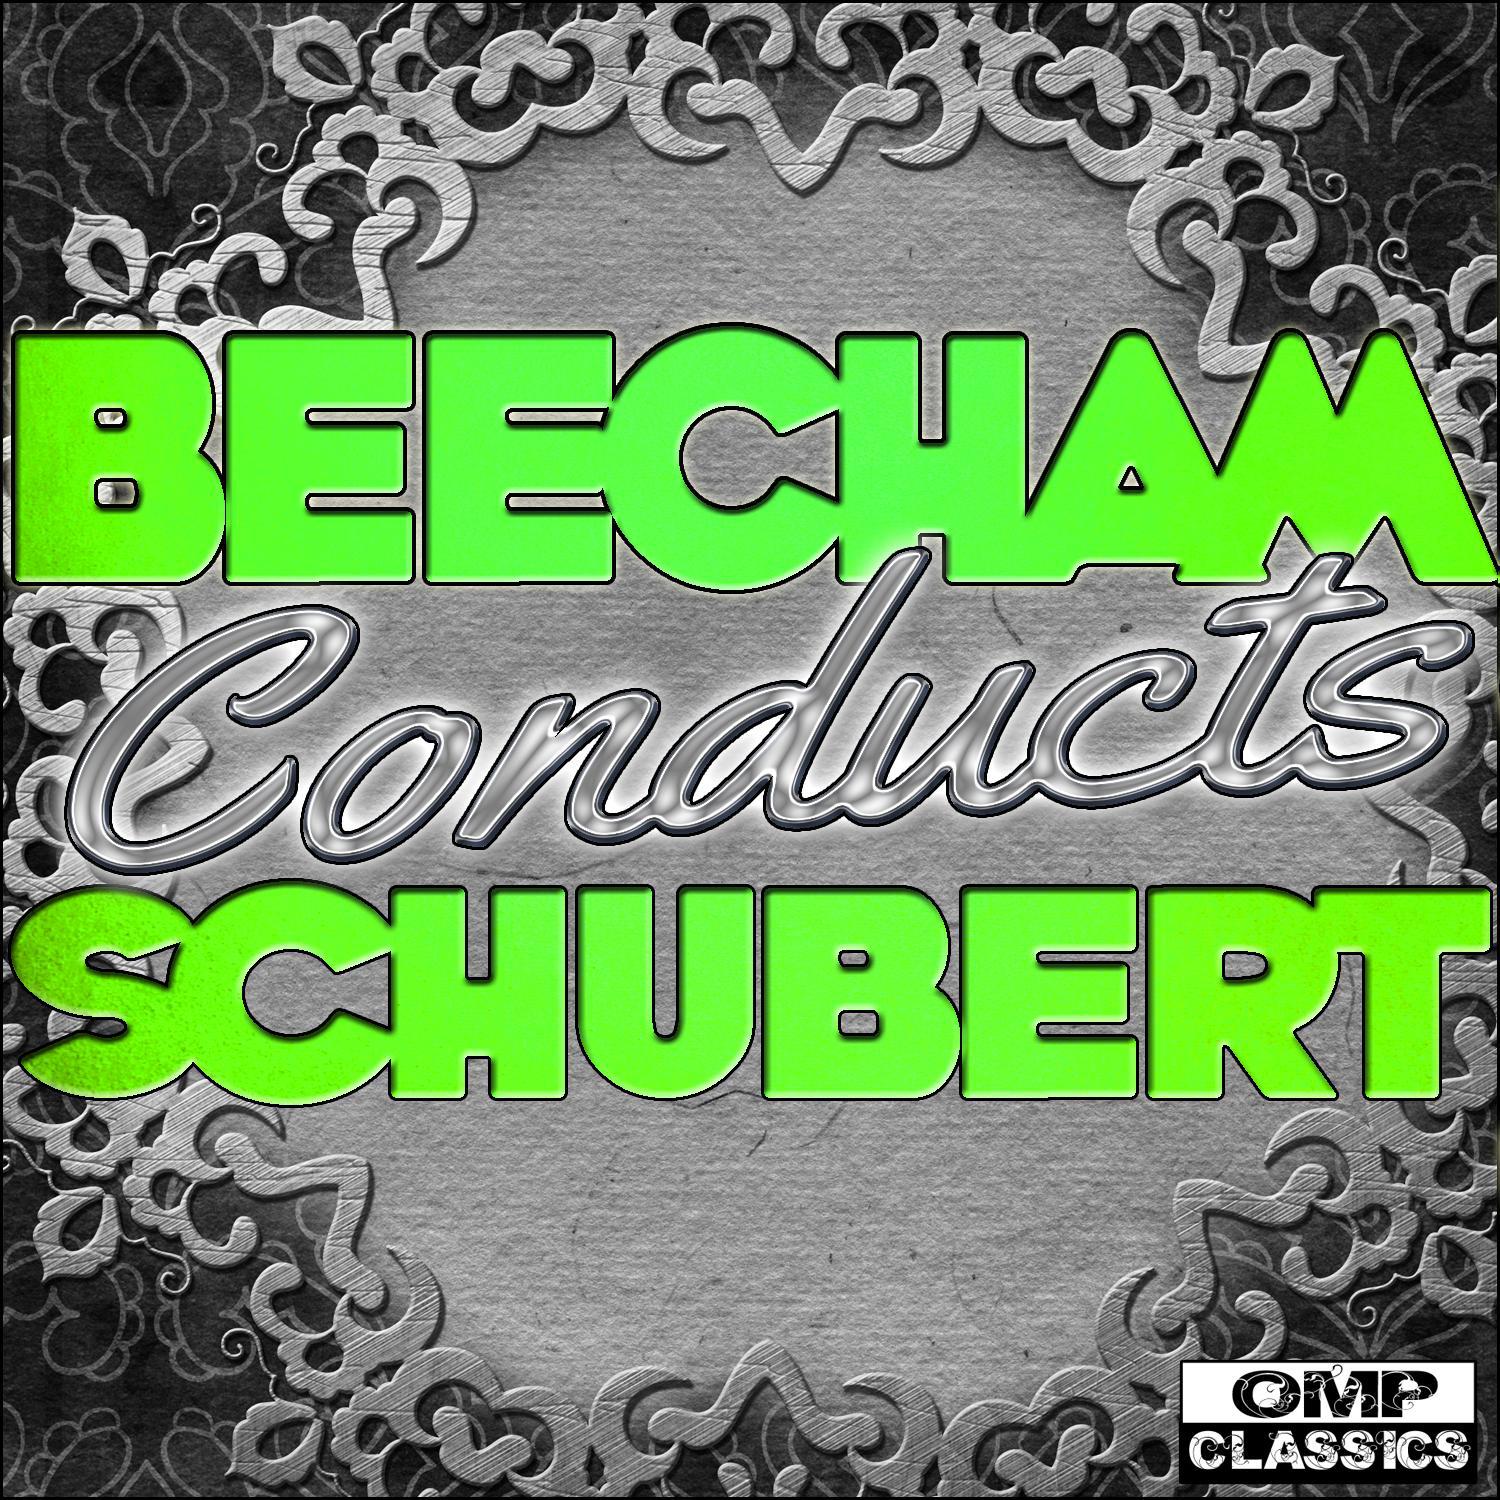 Beecham Conducts: Schubert